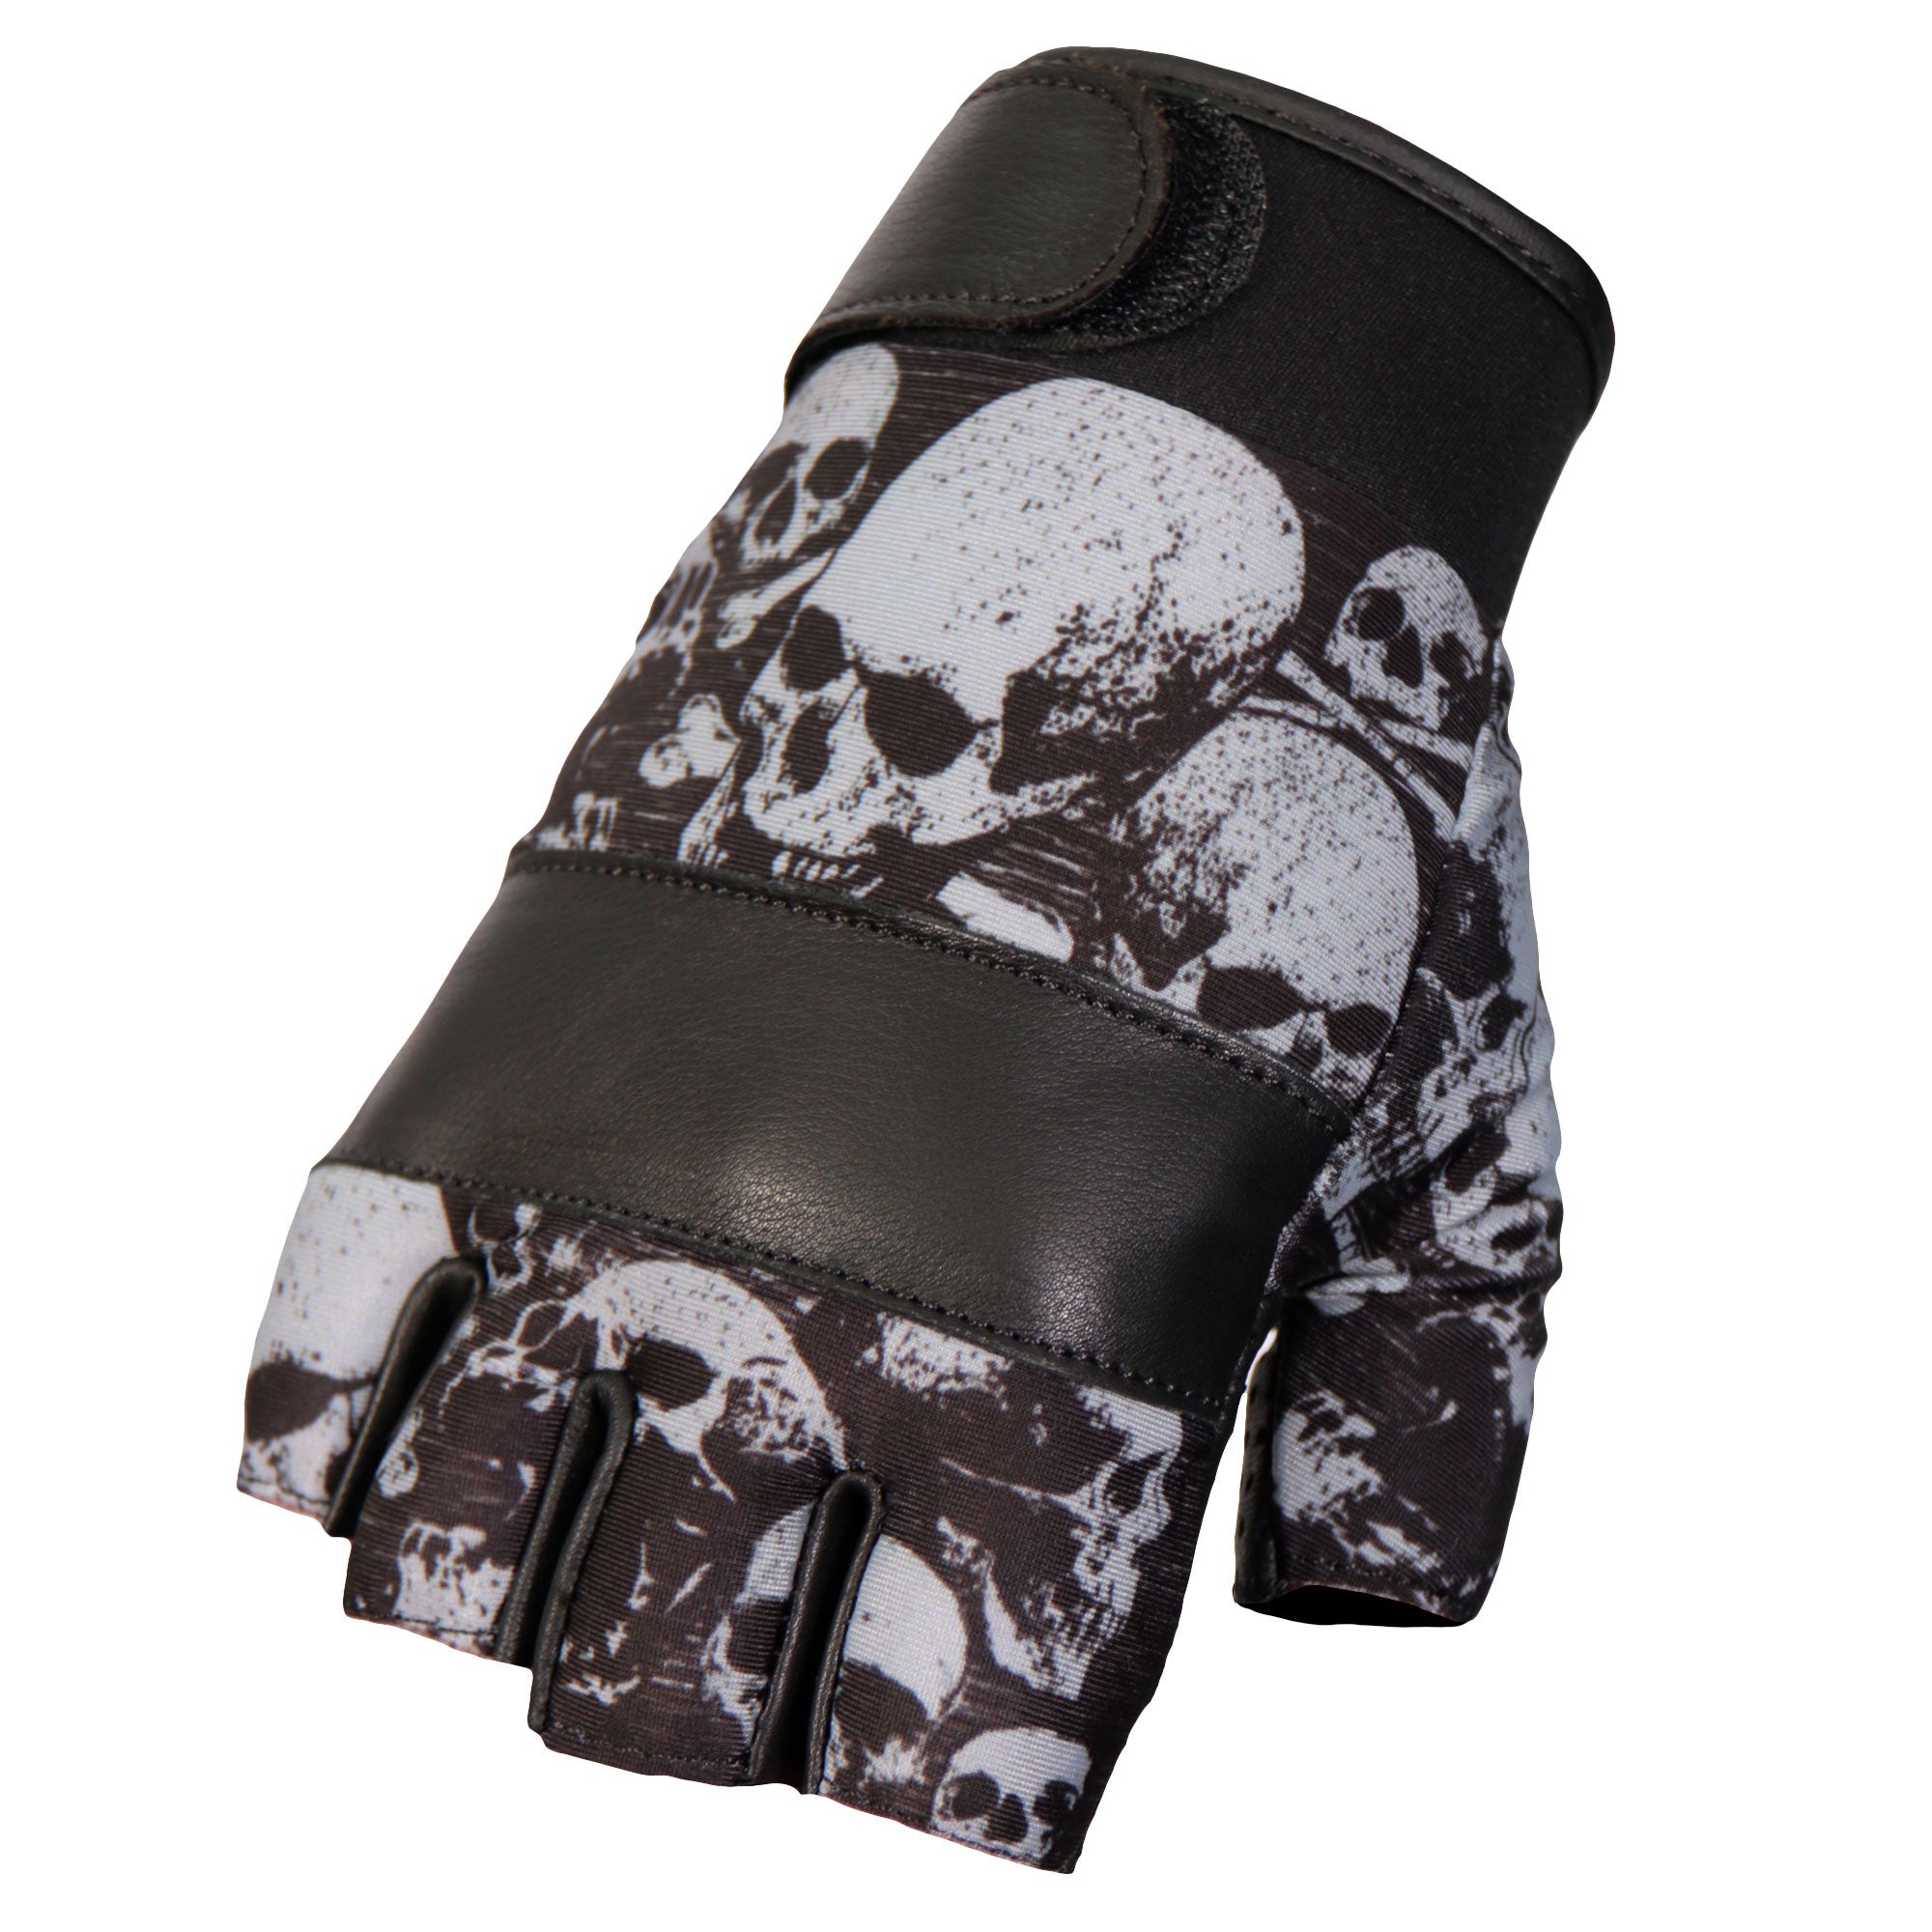 Hot Leathers GVM3009 Uni-Sex Black 'Ancient Skulls' Fingerless Leather Gloves